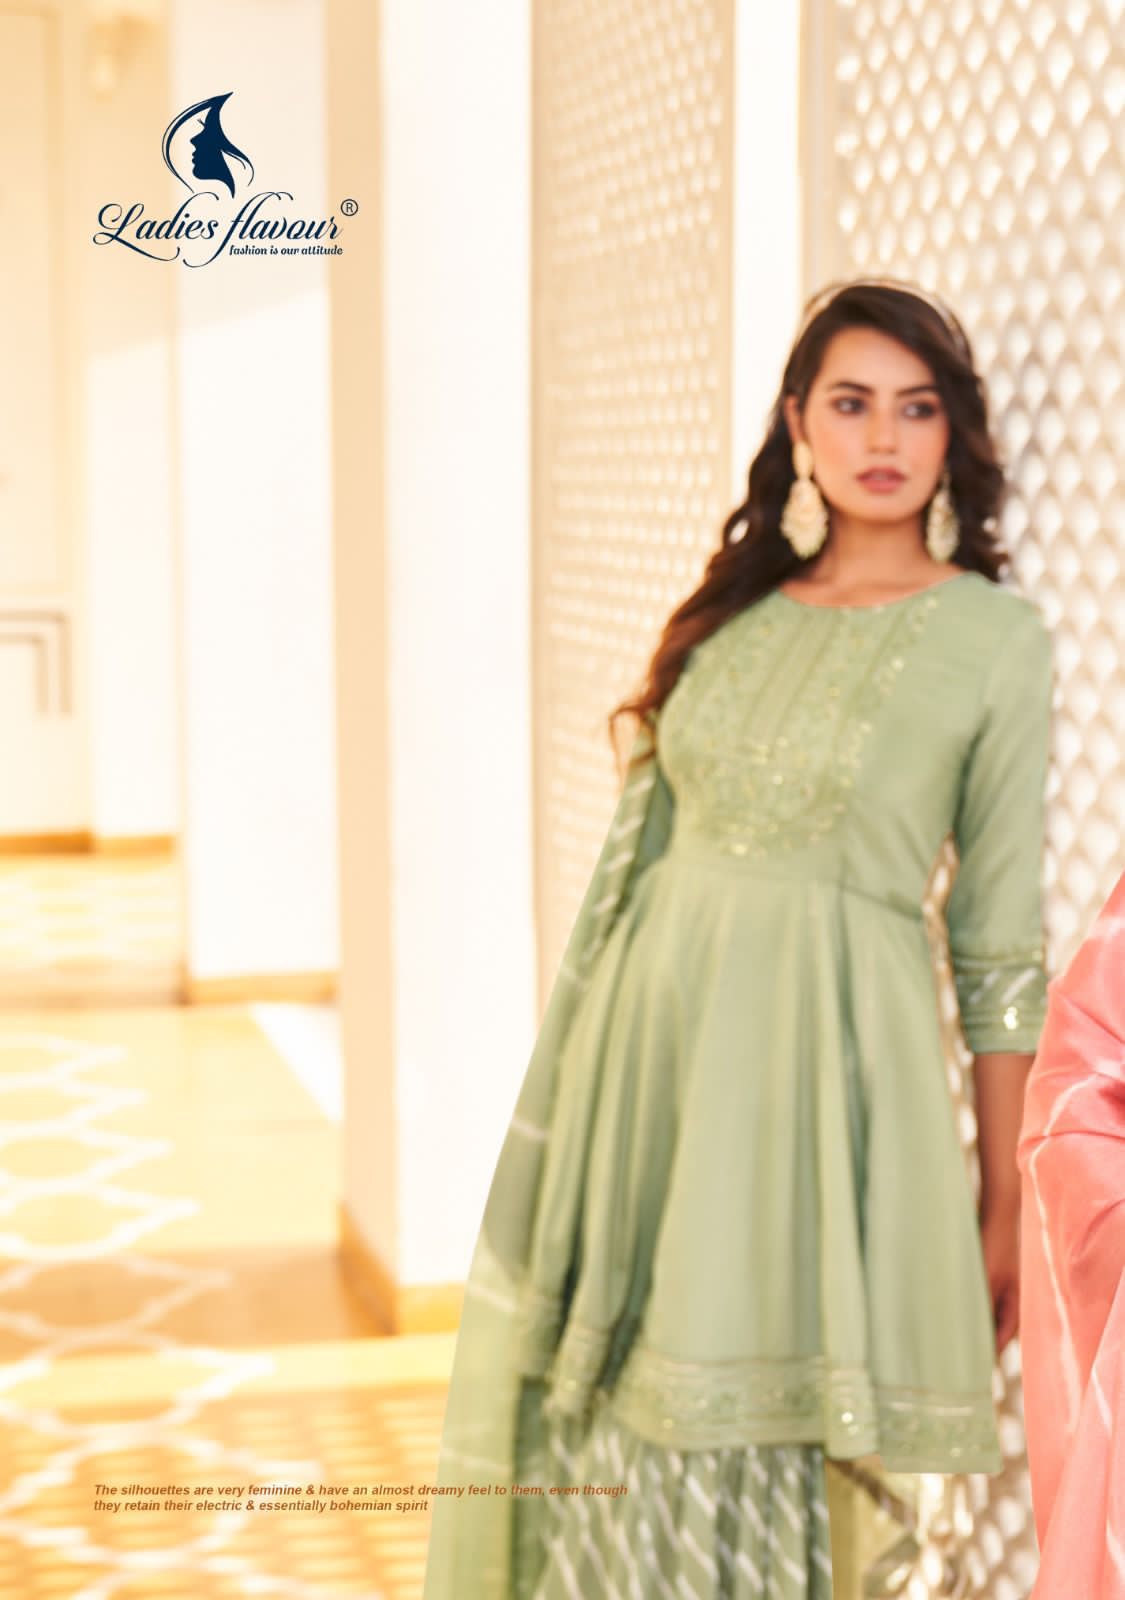 Keshvi Ladies Flavour Chinon Silk Readymade Sharara Suits